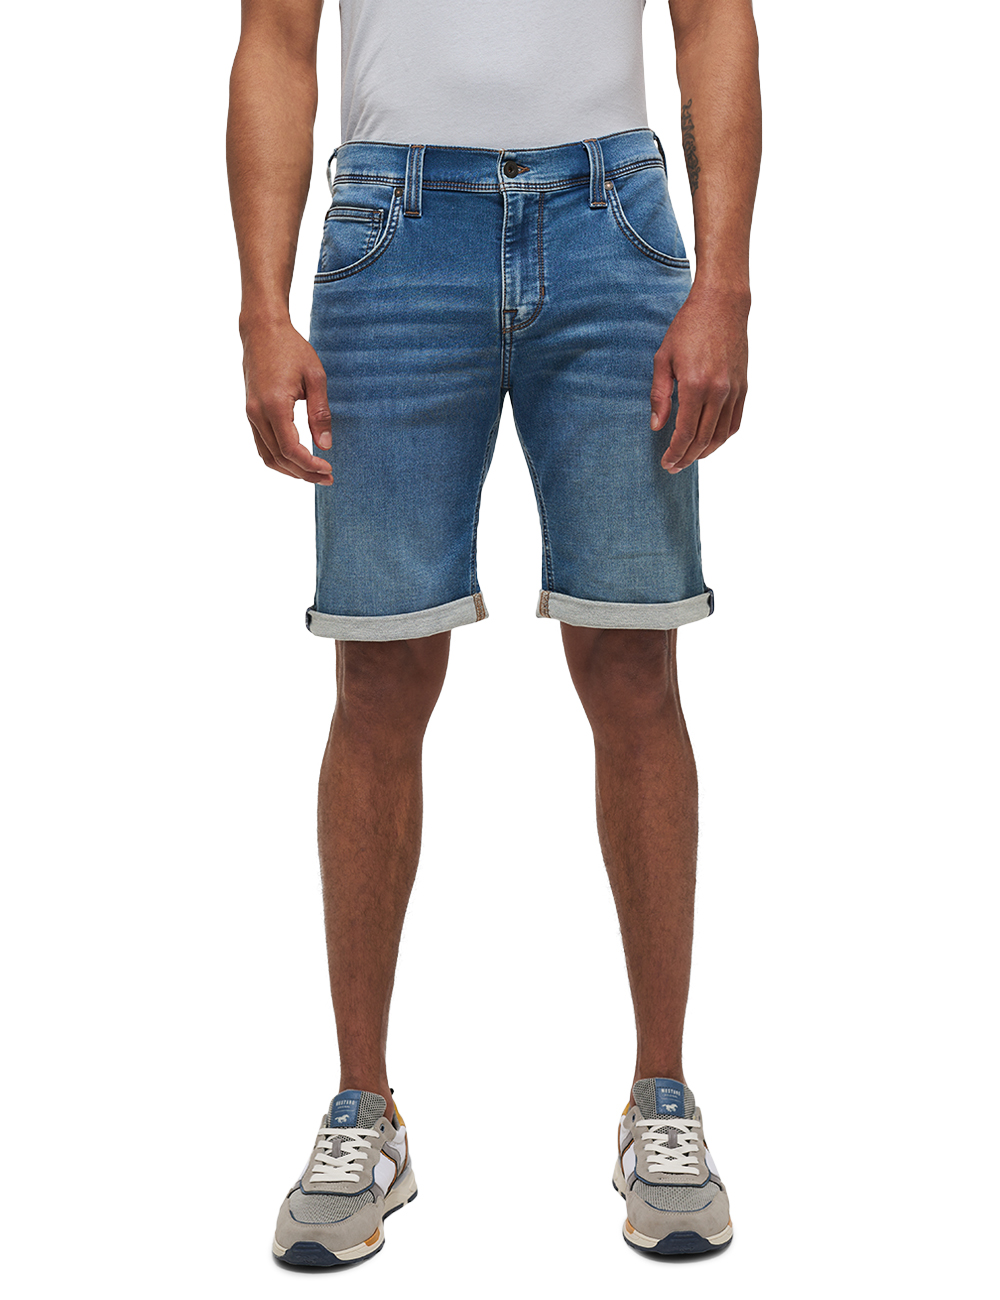 Modetrends aktuelle online Jeans shoppen - jetzt Shorts